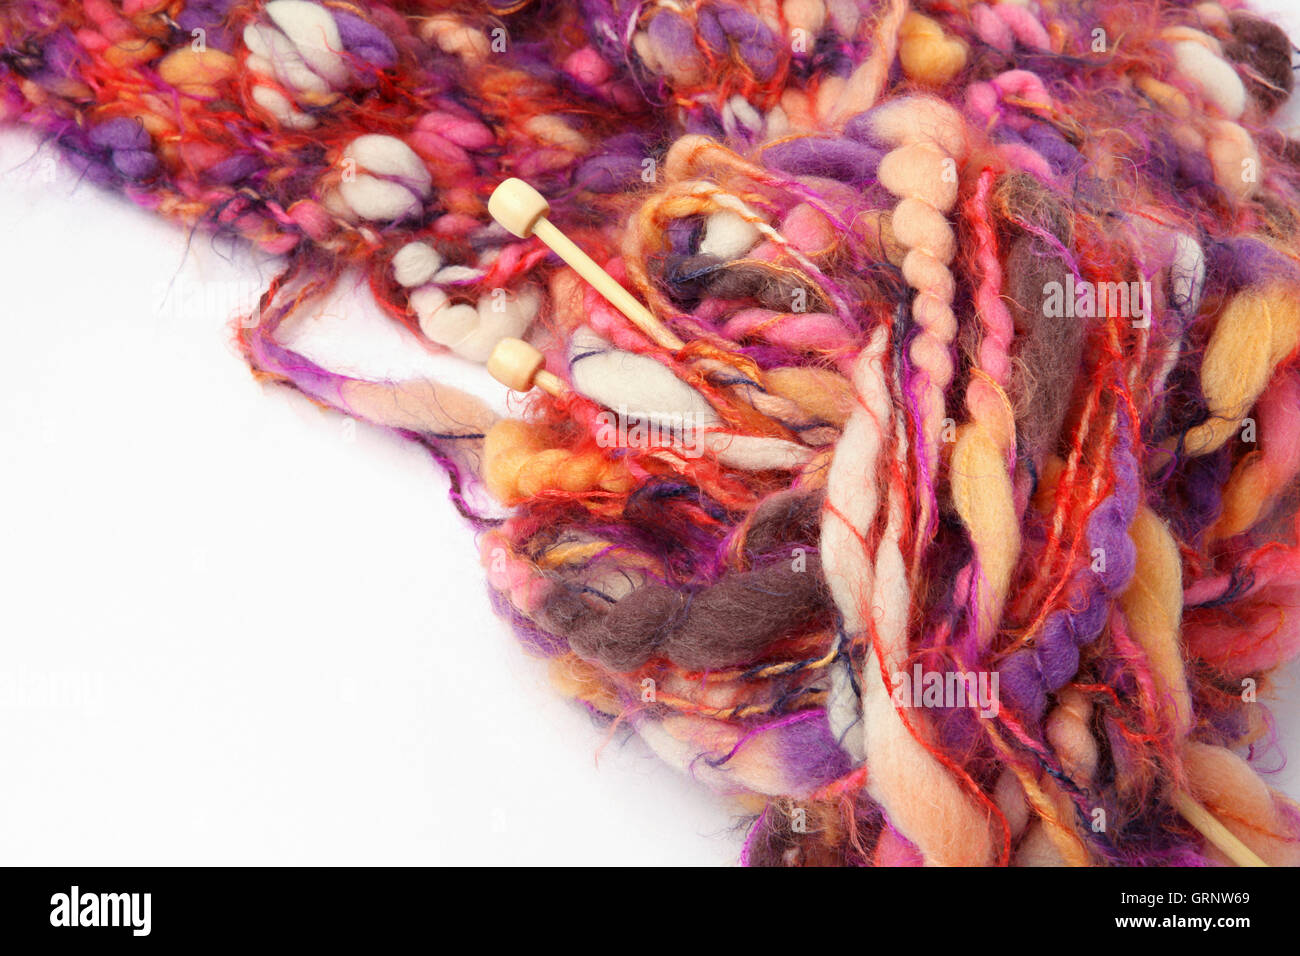 Image of colorful yarn Stock Photo